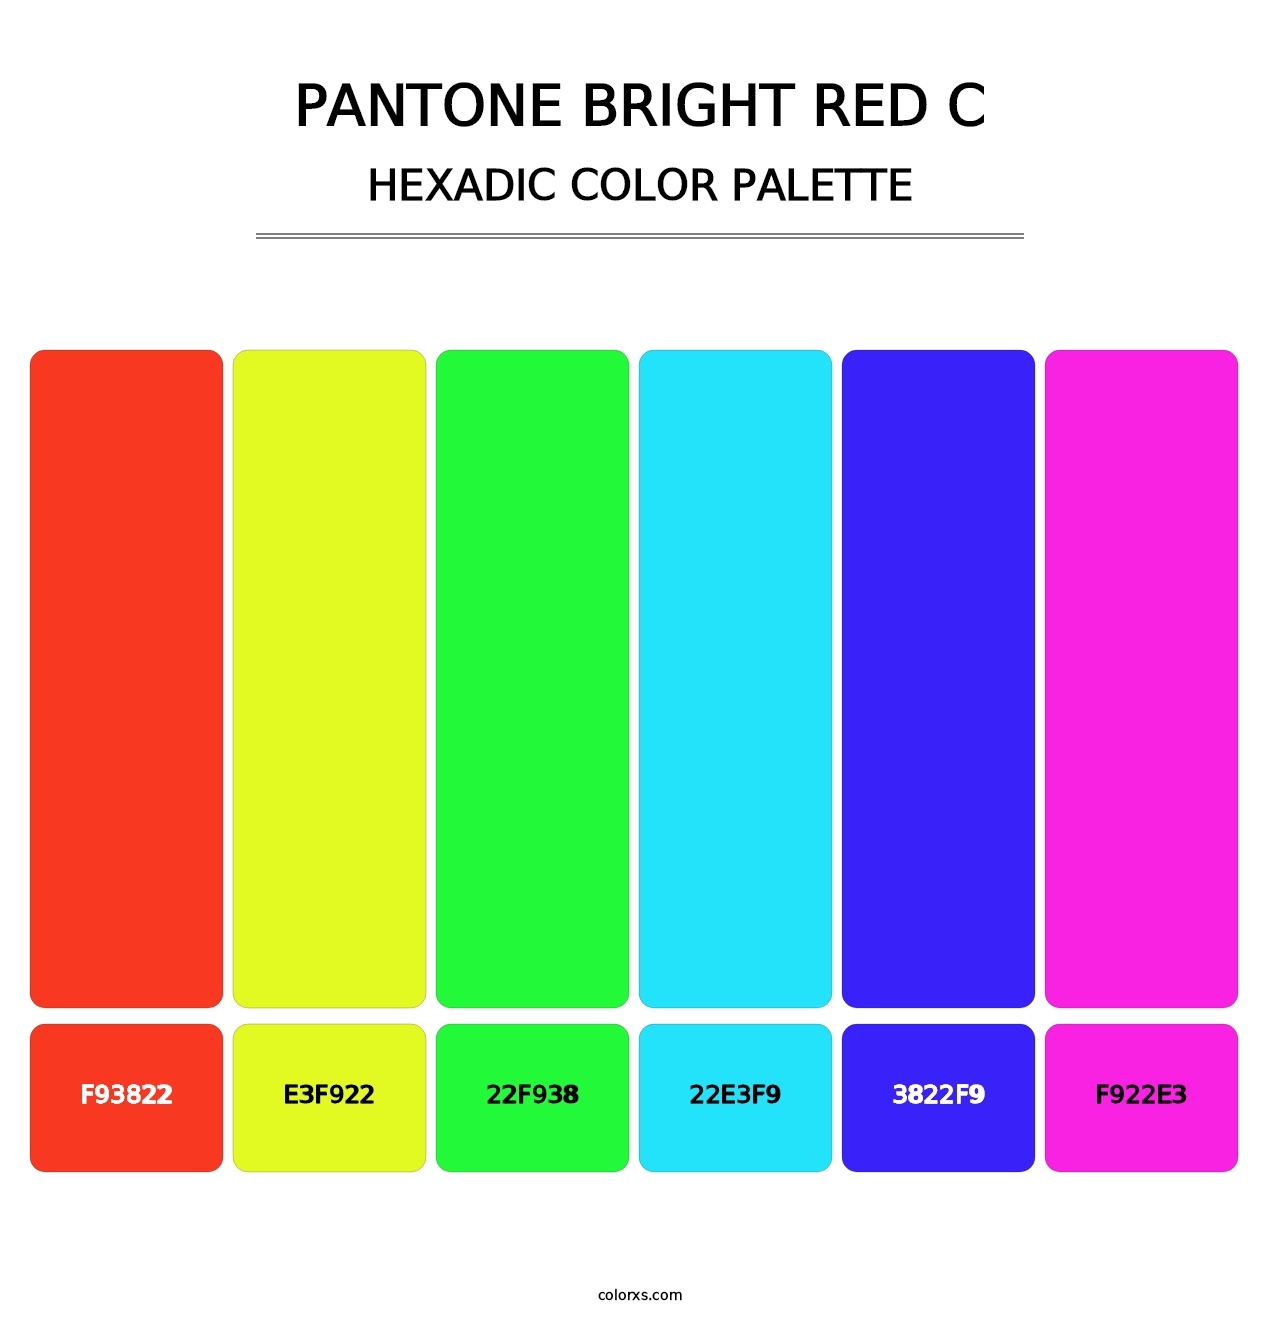 PANTONE Bright Red C - Hexadic Color Palette